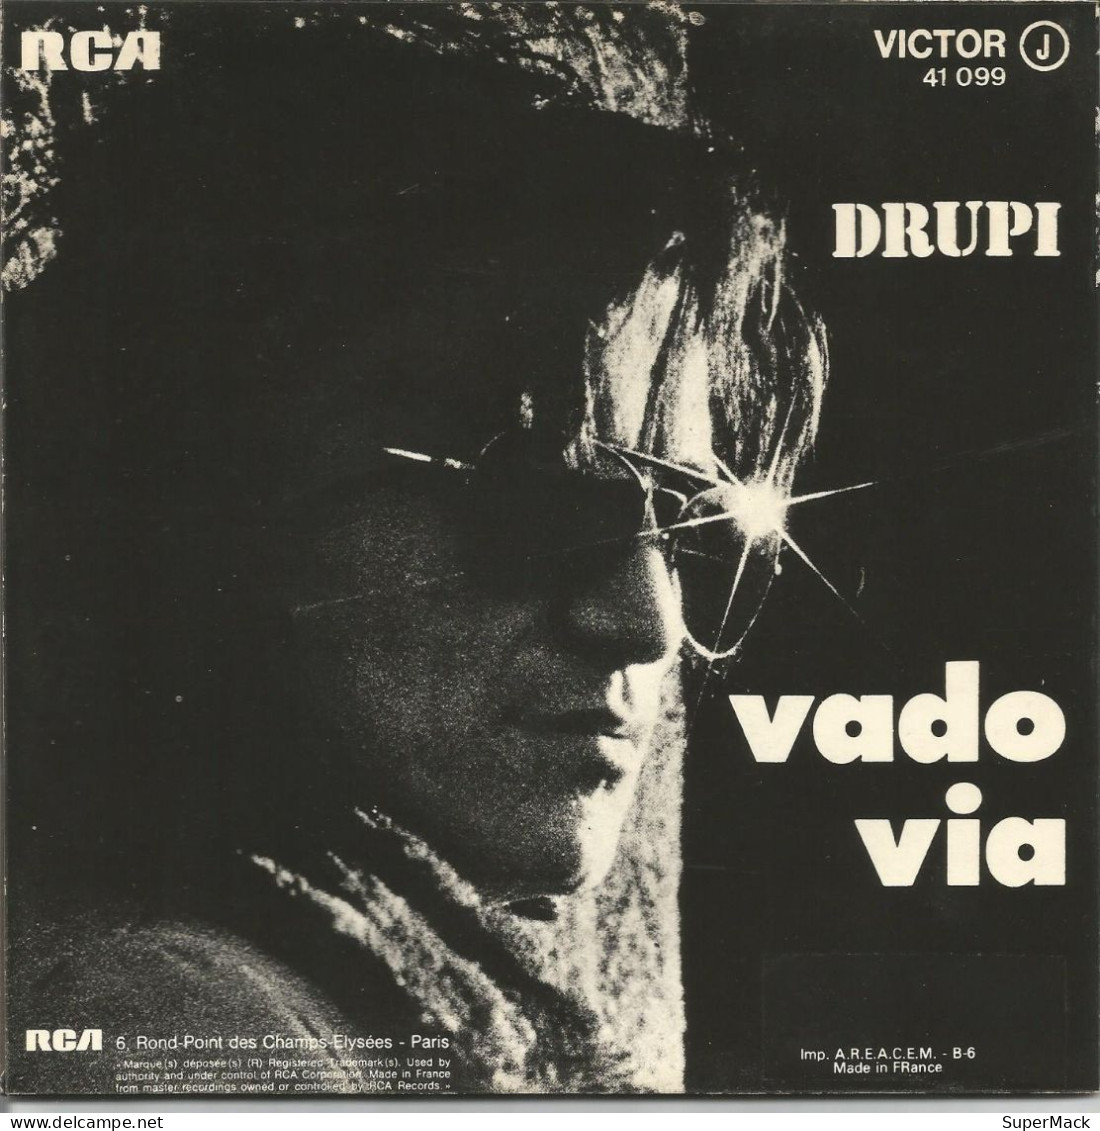 45T Drupi - Vado Via - RCA Victor 41.099 - France - 1973 - Verzameluitgaven